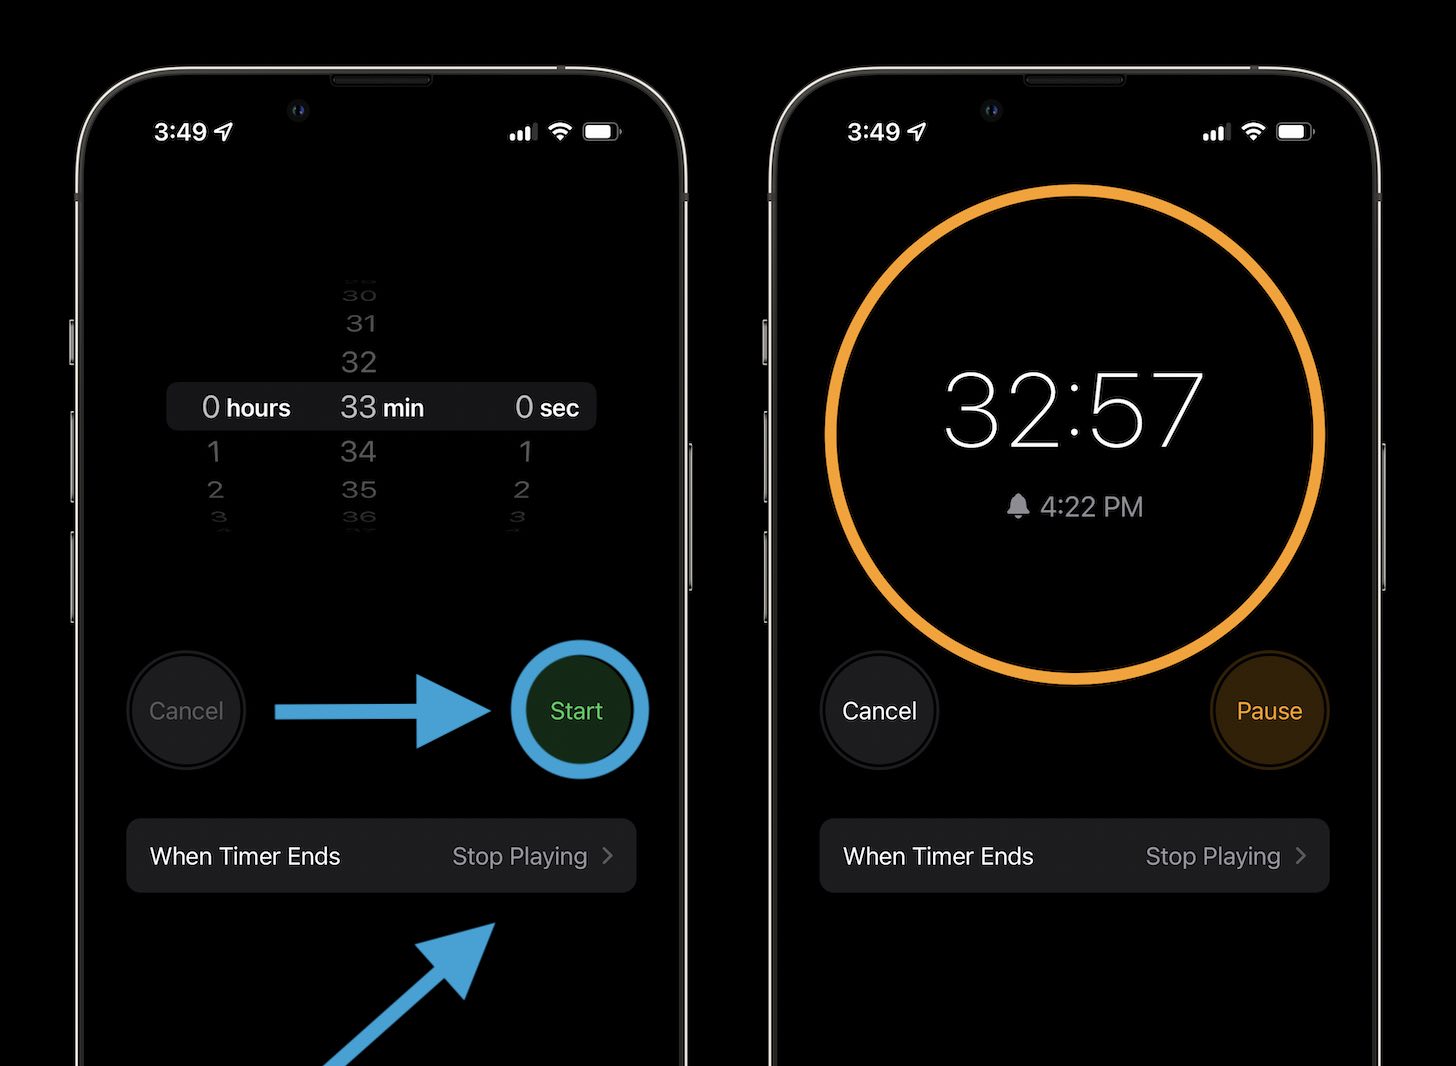 Таймер сна 30 минут. Таймер на айфоне. Таймер сна. Приложение Sleep timer. Таймер приложение айфон.